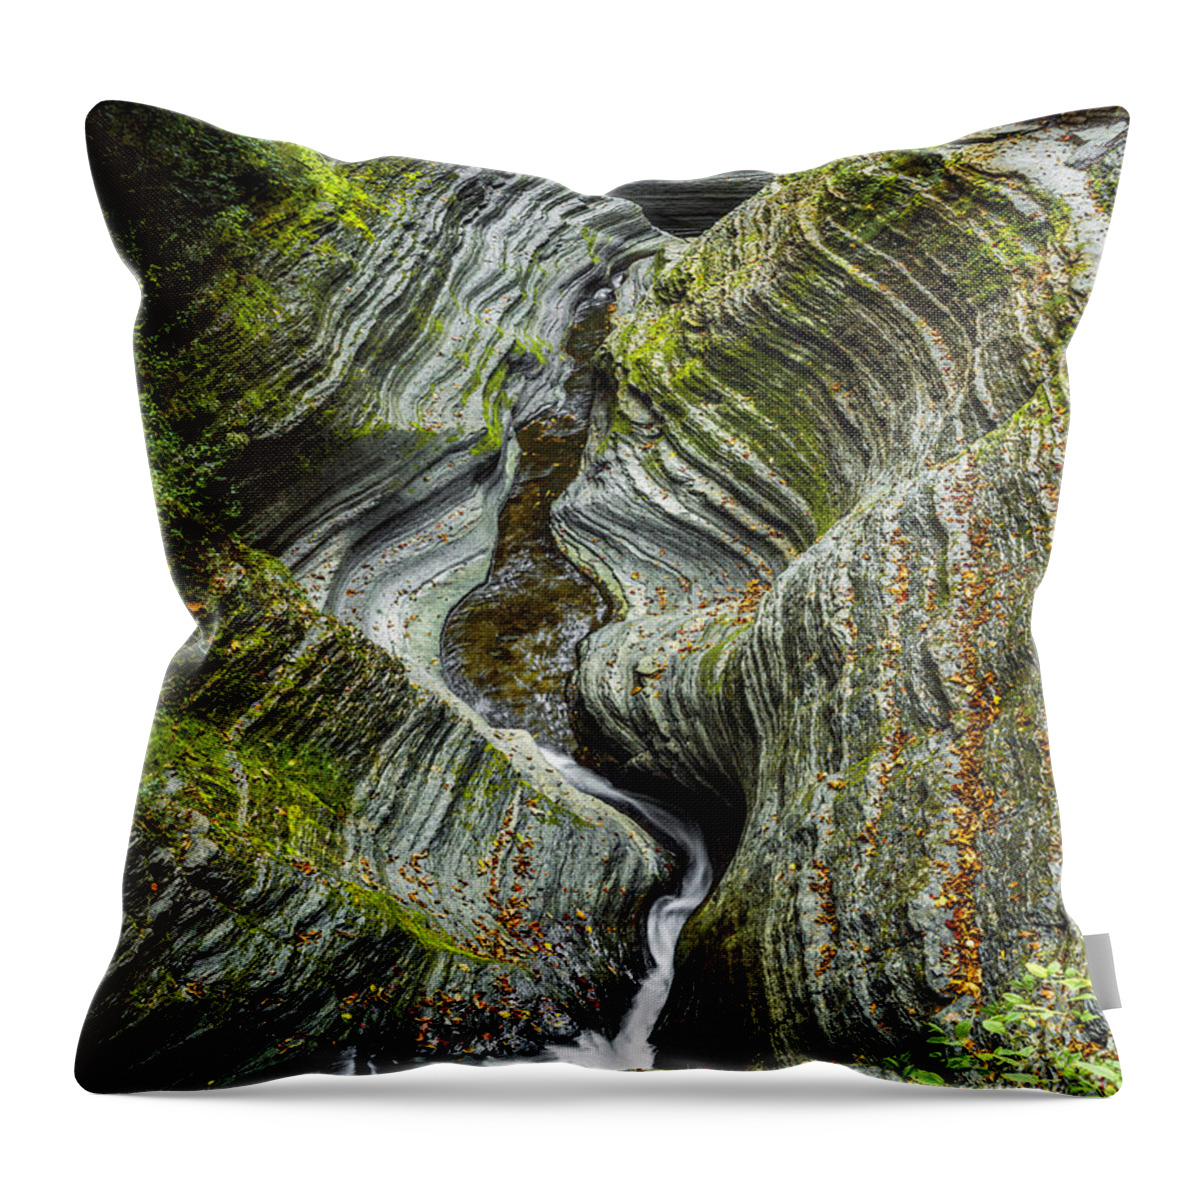 New York Throw Pillow featuring the photograph Sprial Tunnel Gorge Near Cavern Cascade by Karen Jorstad